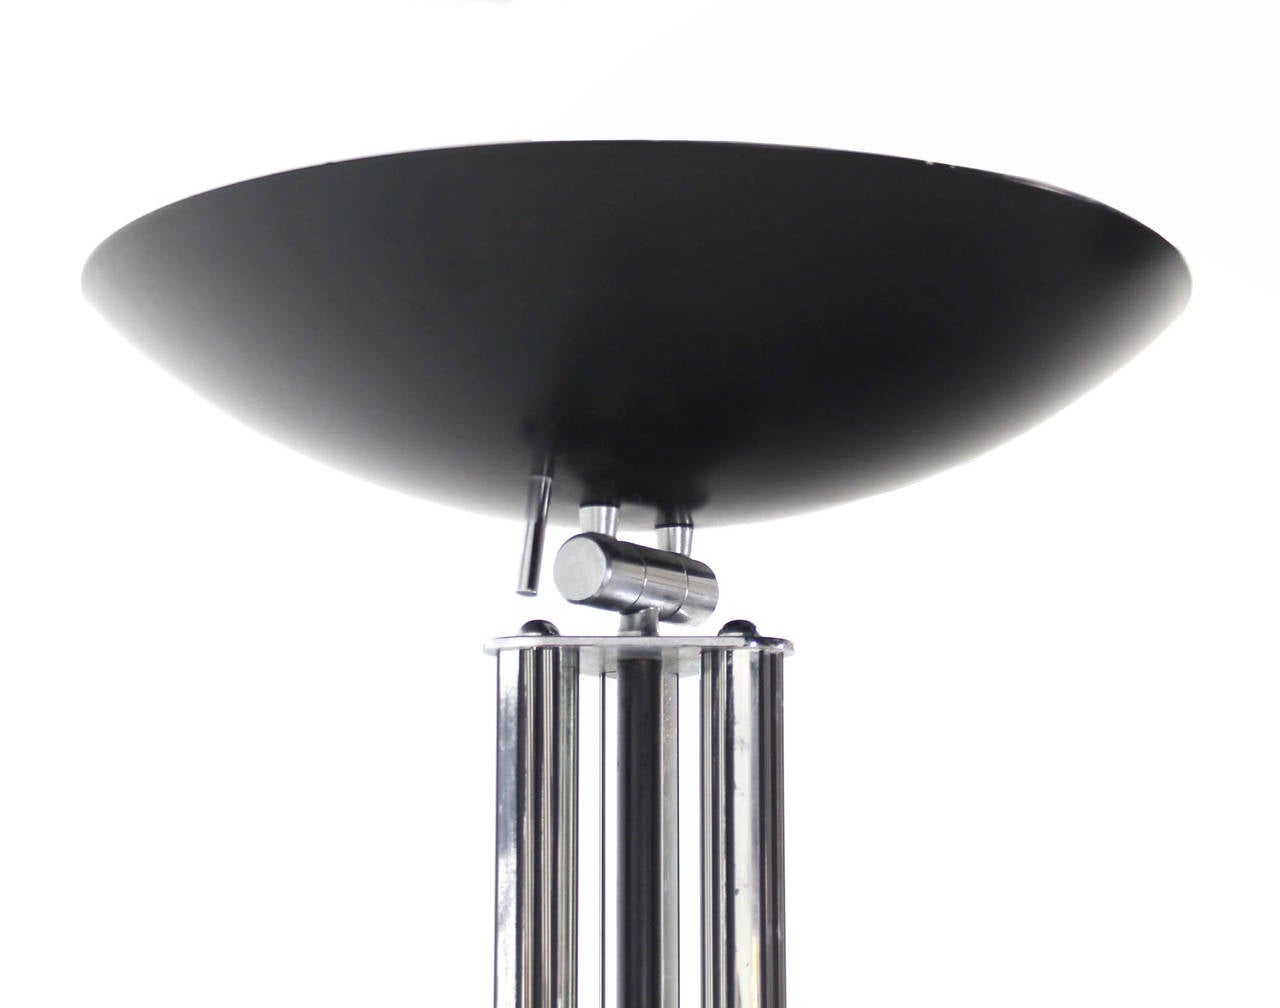 American Adjustable Tilt Head Shade Mid Century Modern Floor Lamp with Dimmer